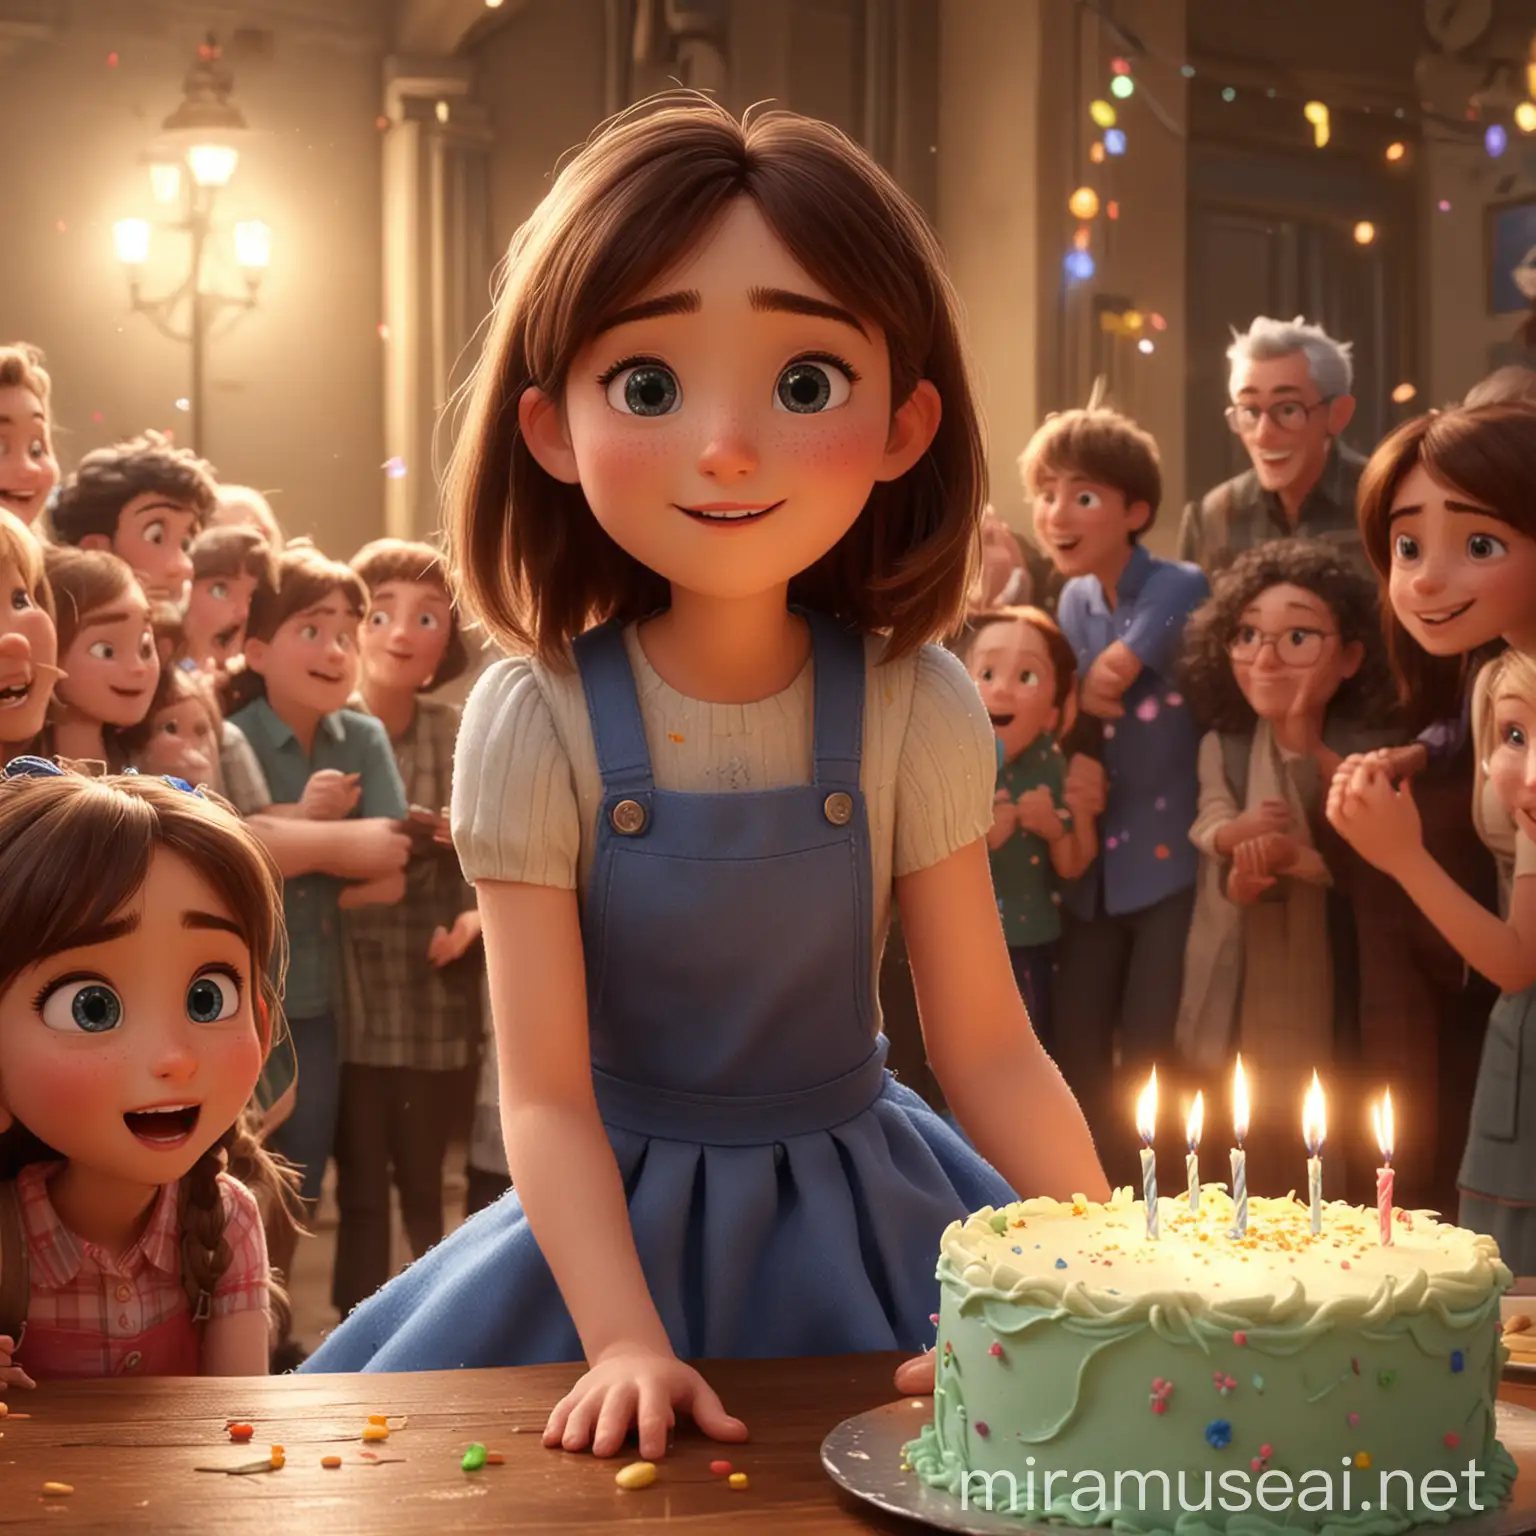 Birthday Celebration Girl Making a Wish with Cake Pixar Style